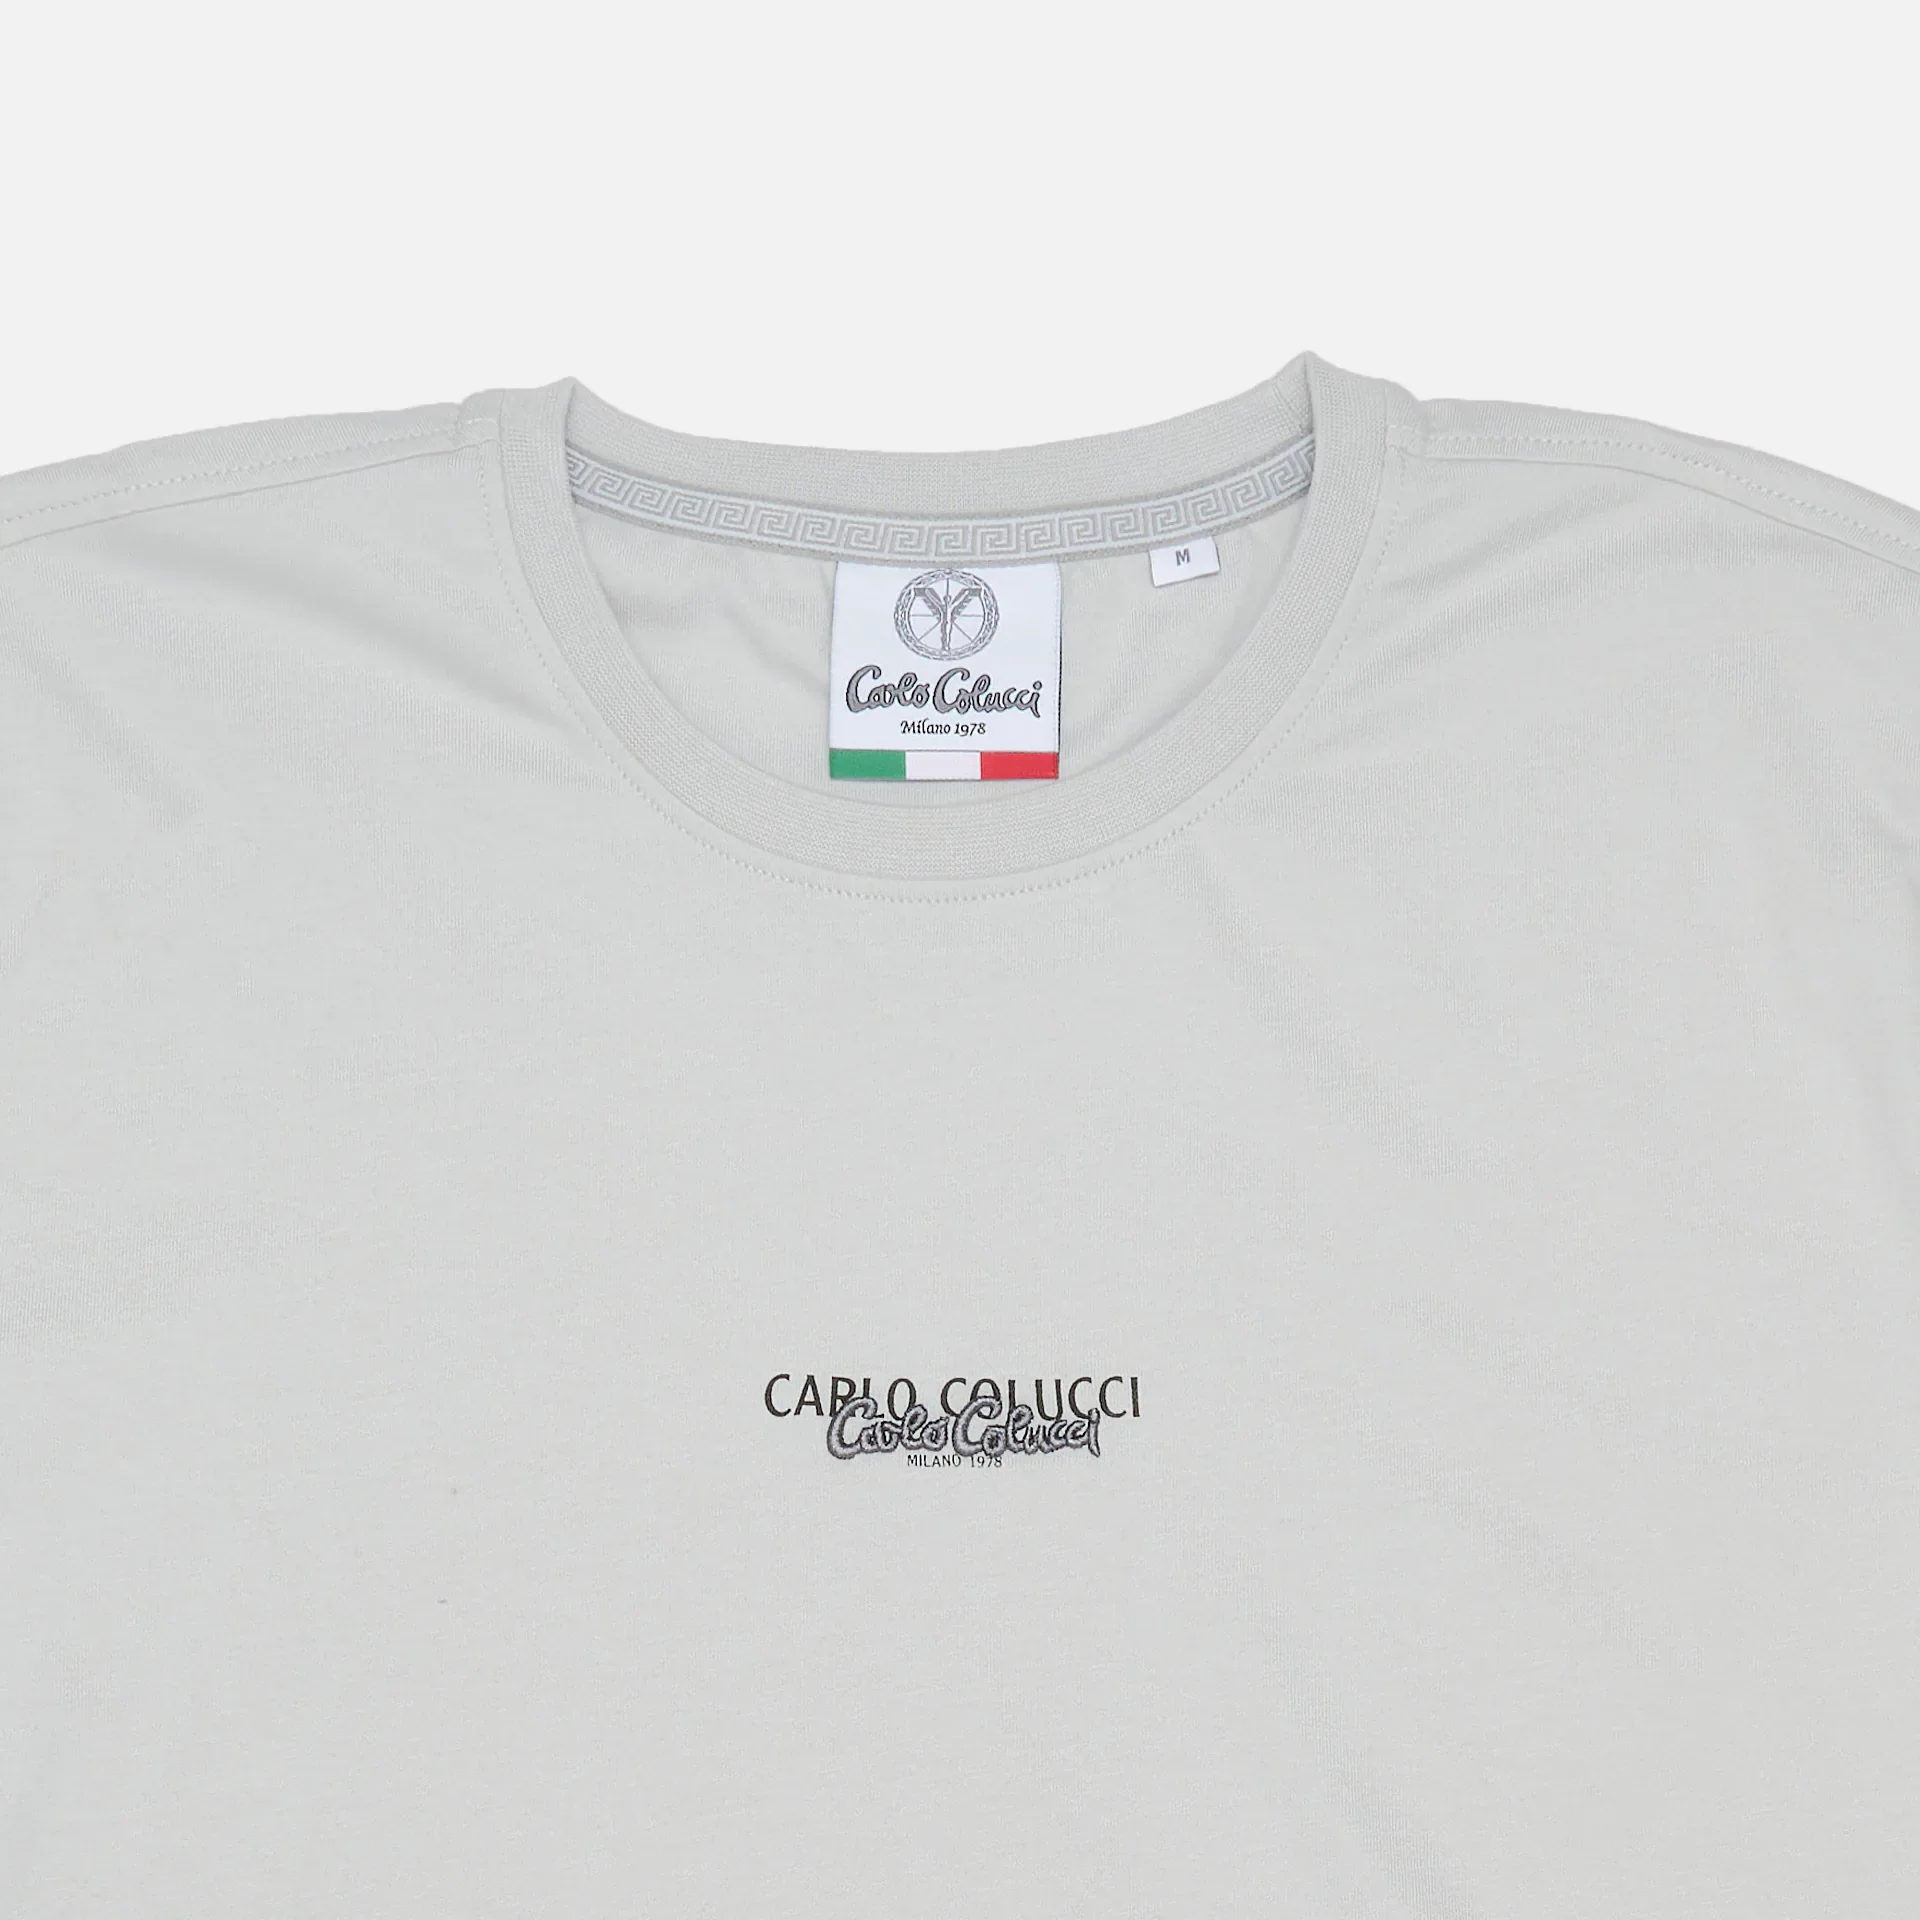 Carlo Colucci T-Shirt Basic Line Light Grey